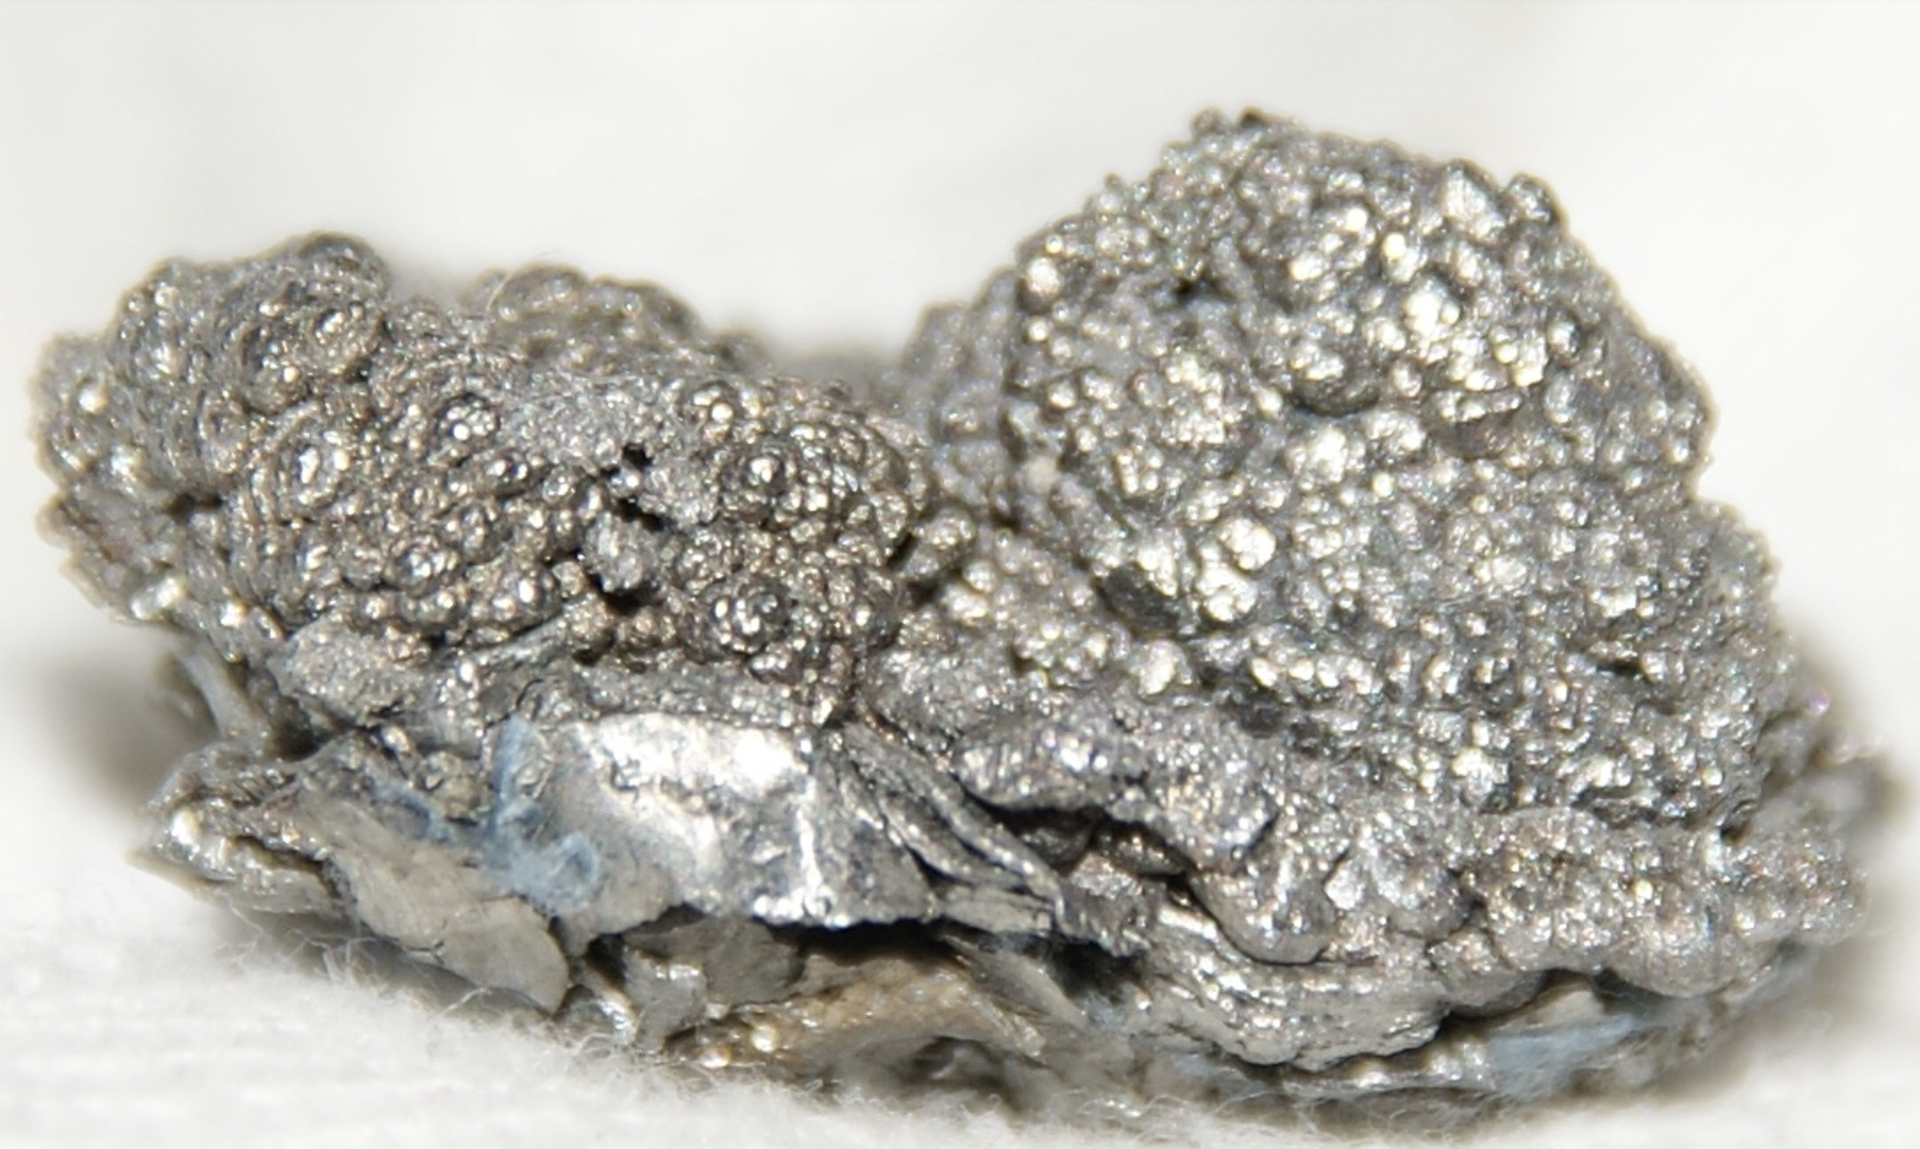 hafnium mineral i sølvfarge